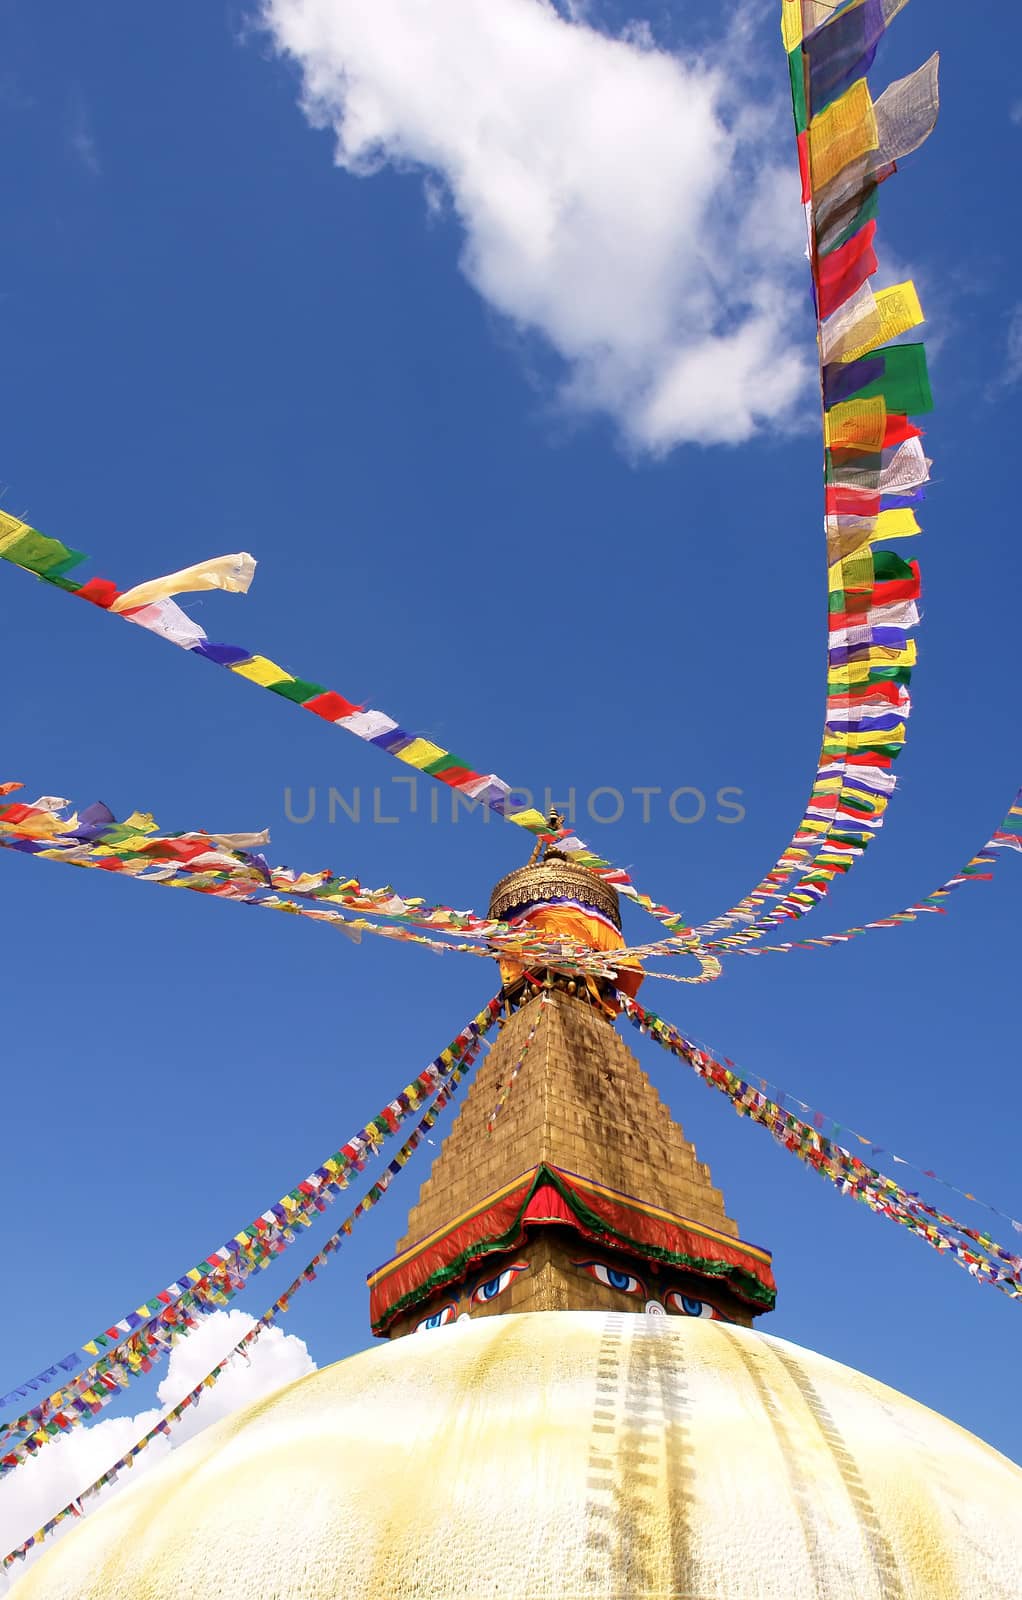 bodhnath stupa in kathmandu with buddha eyes and prayer flags on clear blue sky background